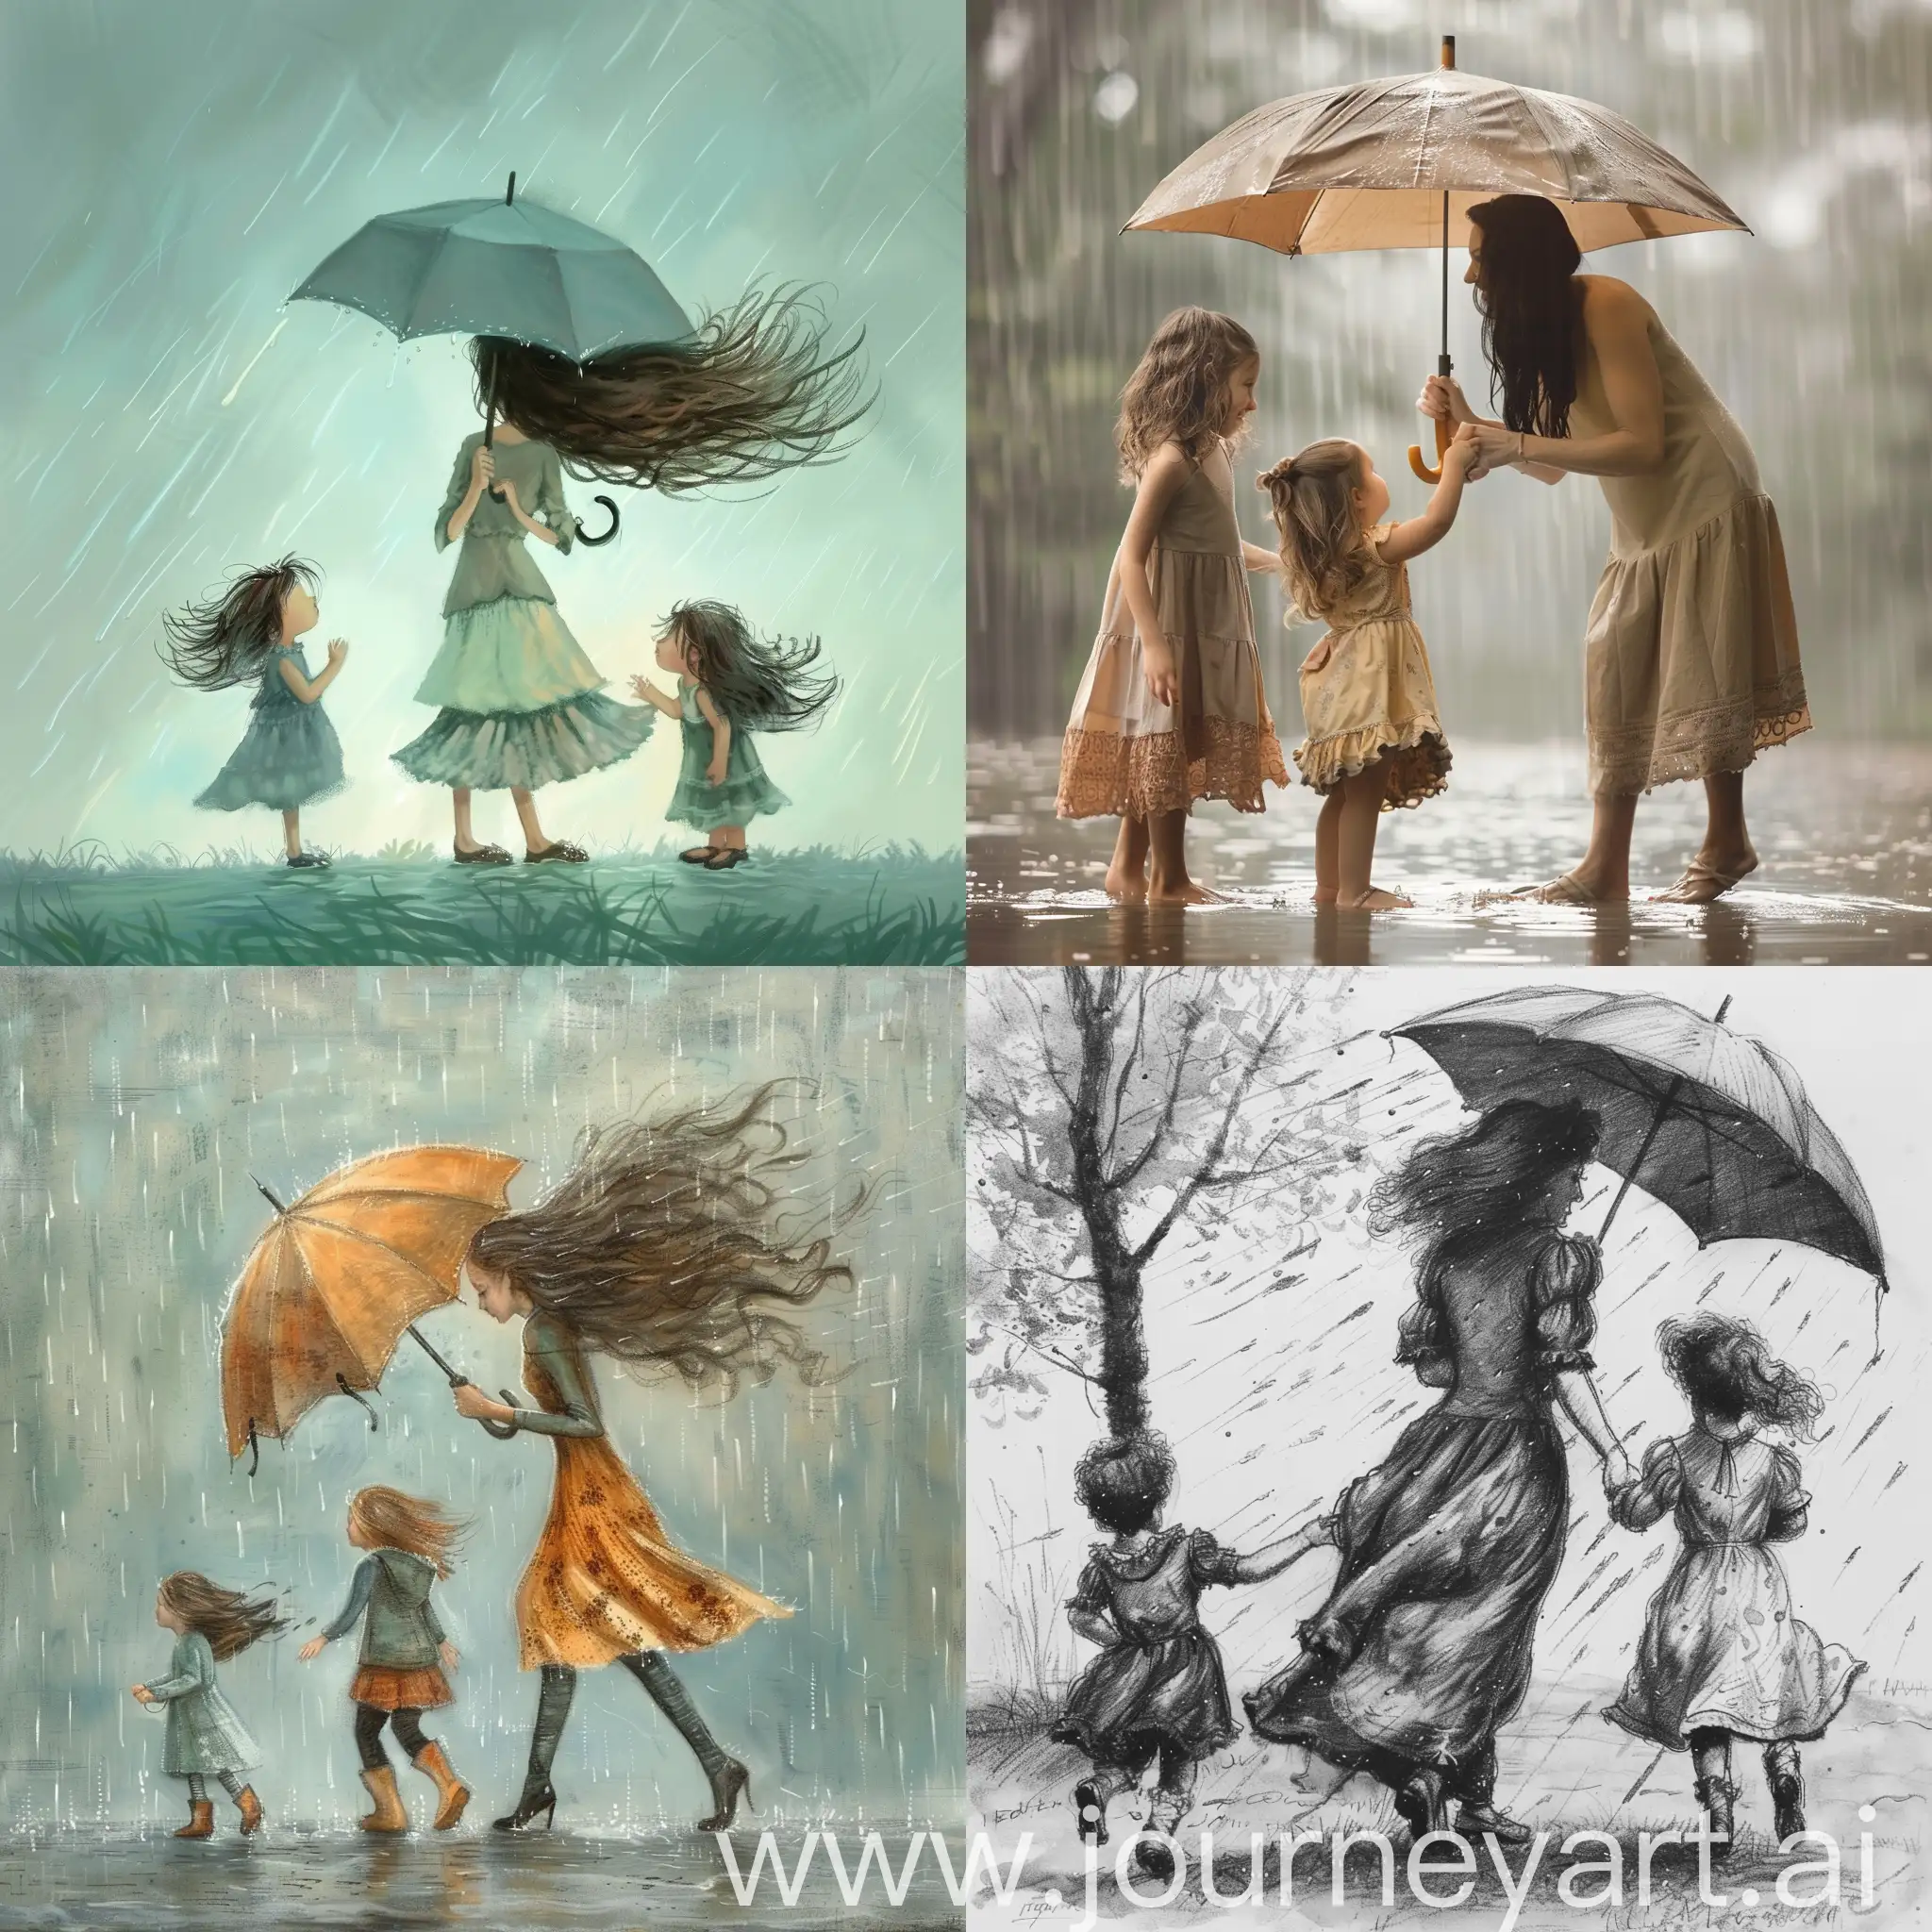 Mother-Shielding-Daughters-with-Umbrella-in-Gentle-Rain